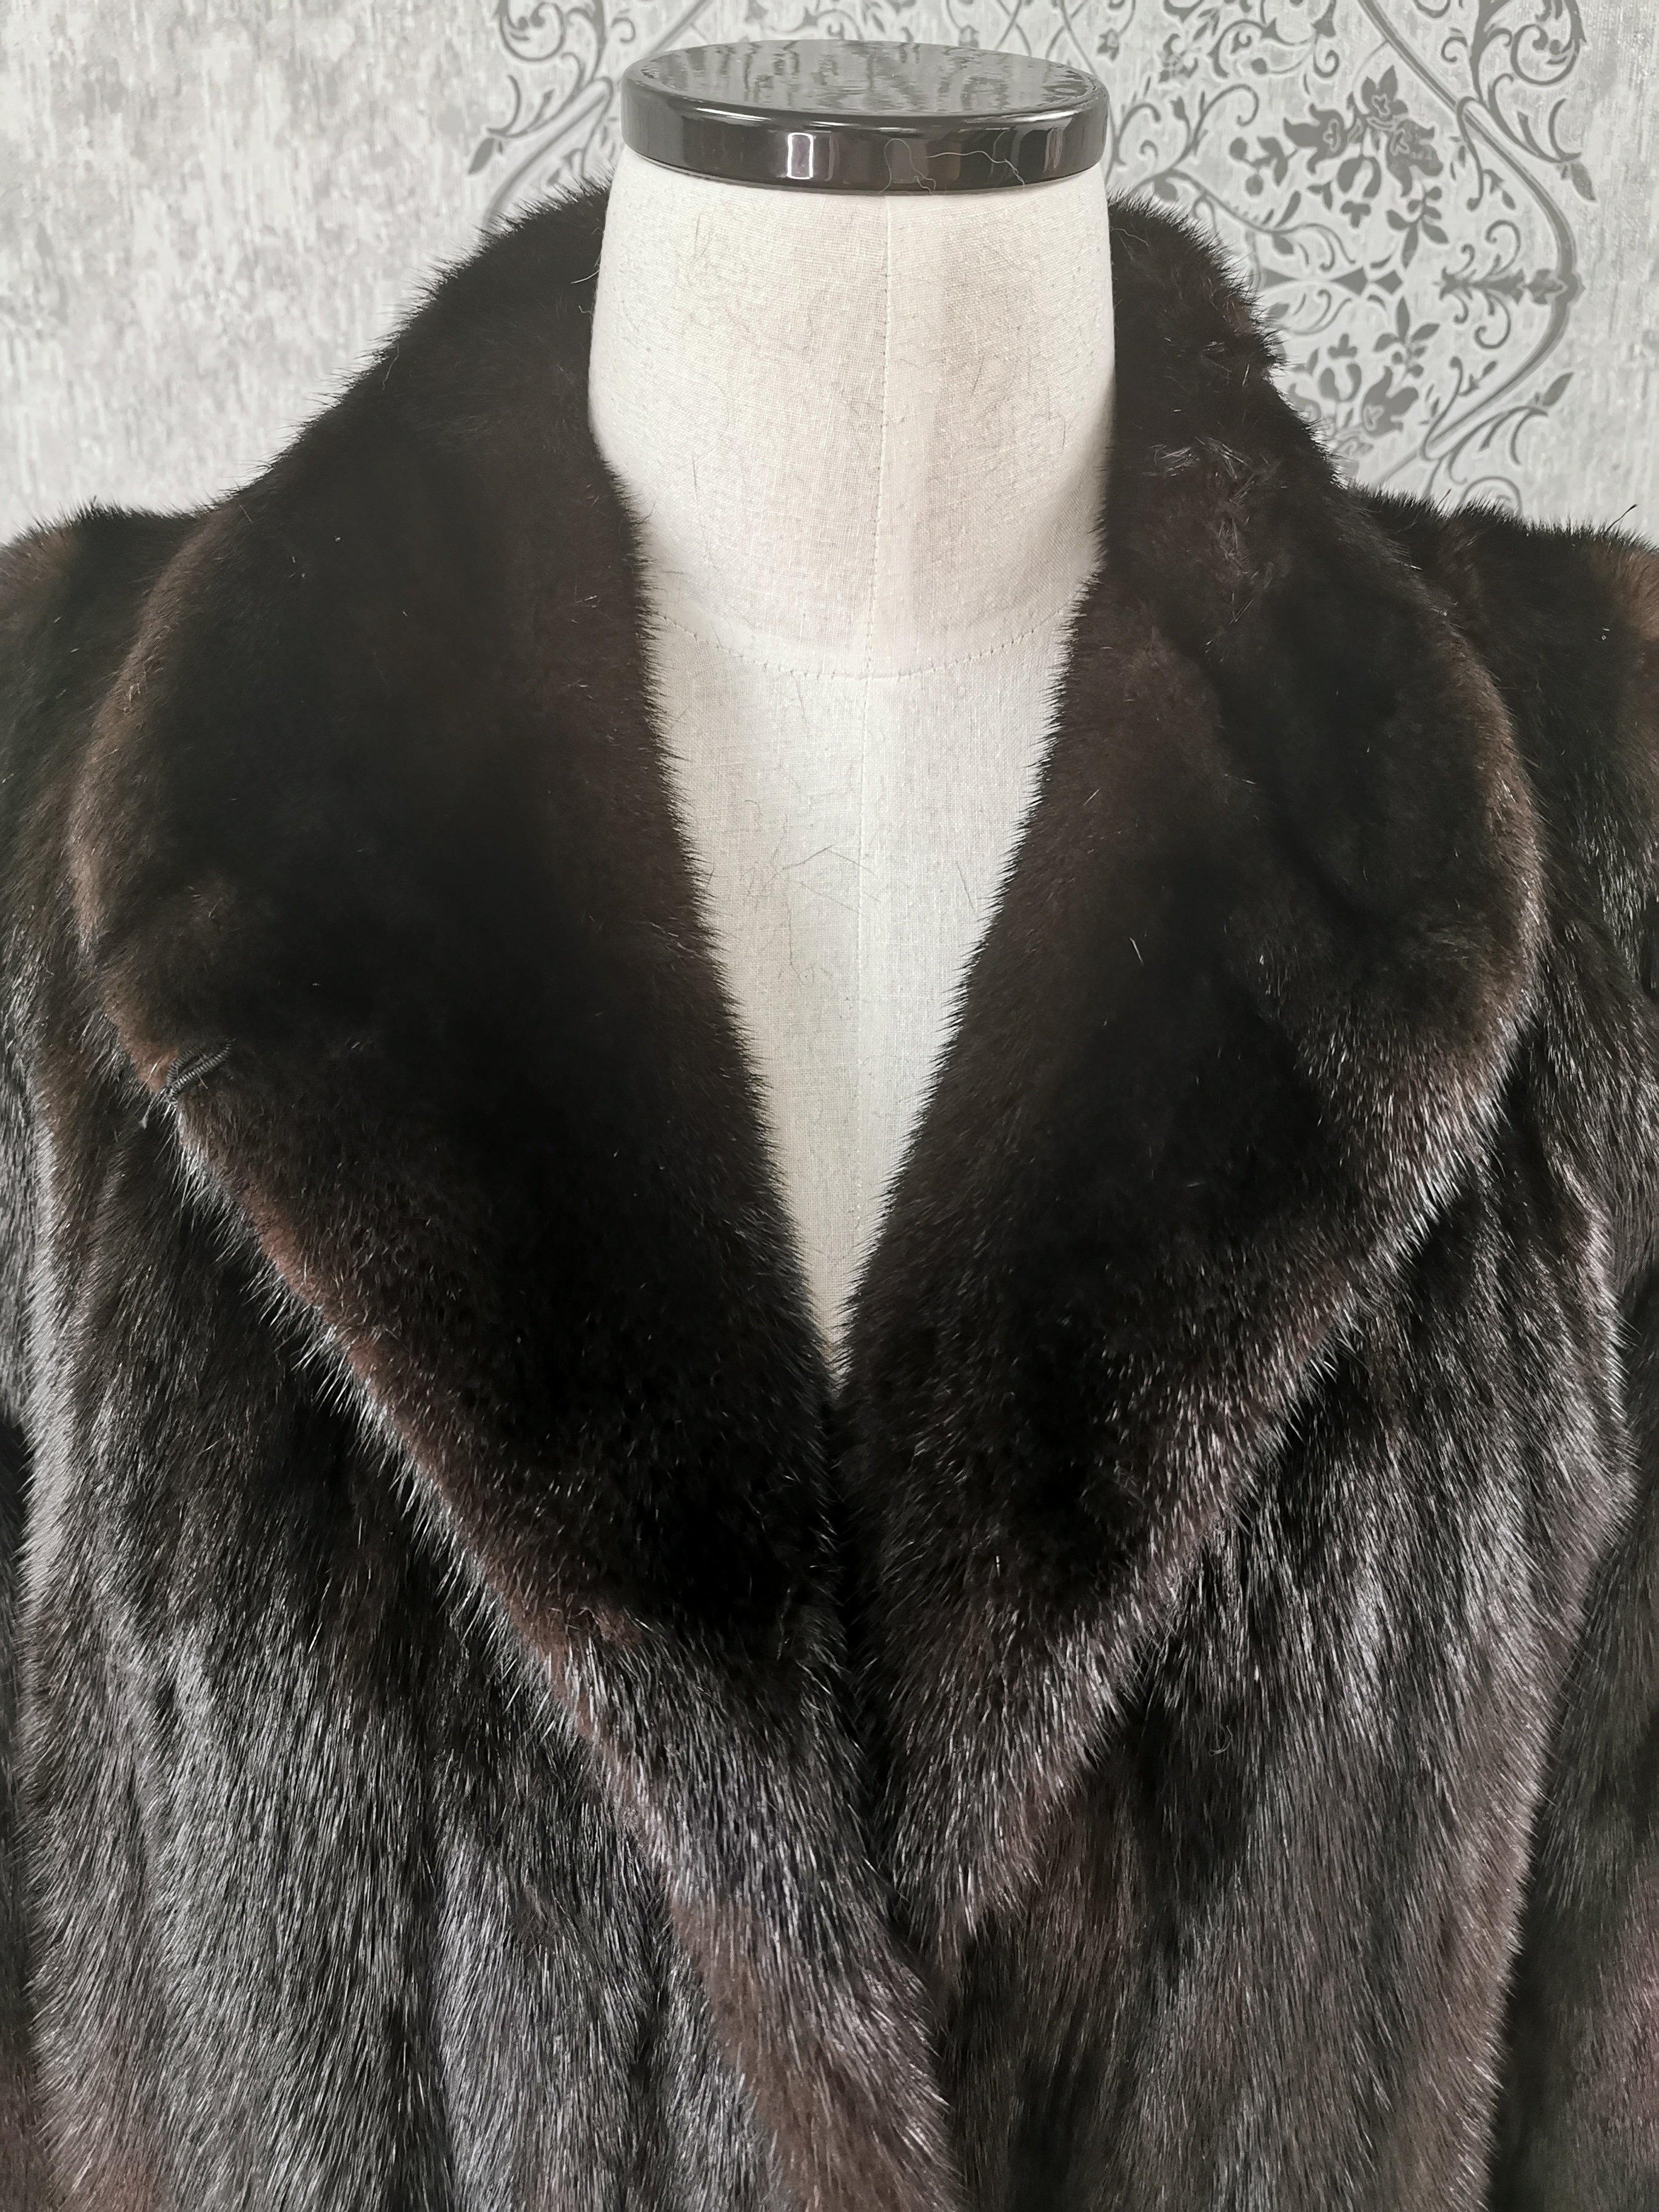 Black Brand New Perry Ellis Ranch Mink Fur Coat (Size 10-M) For Sale